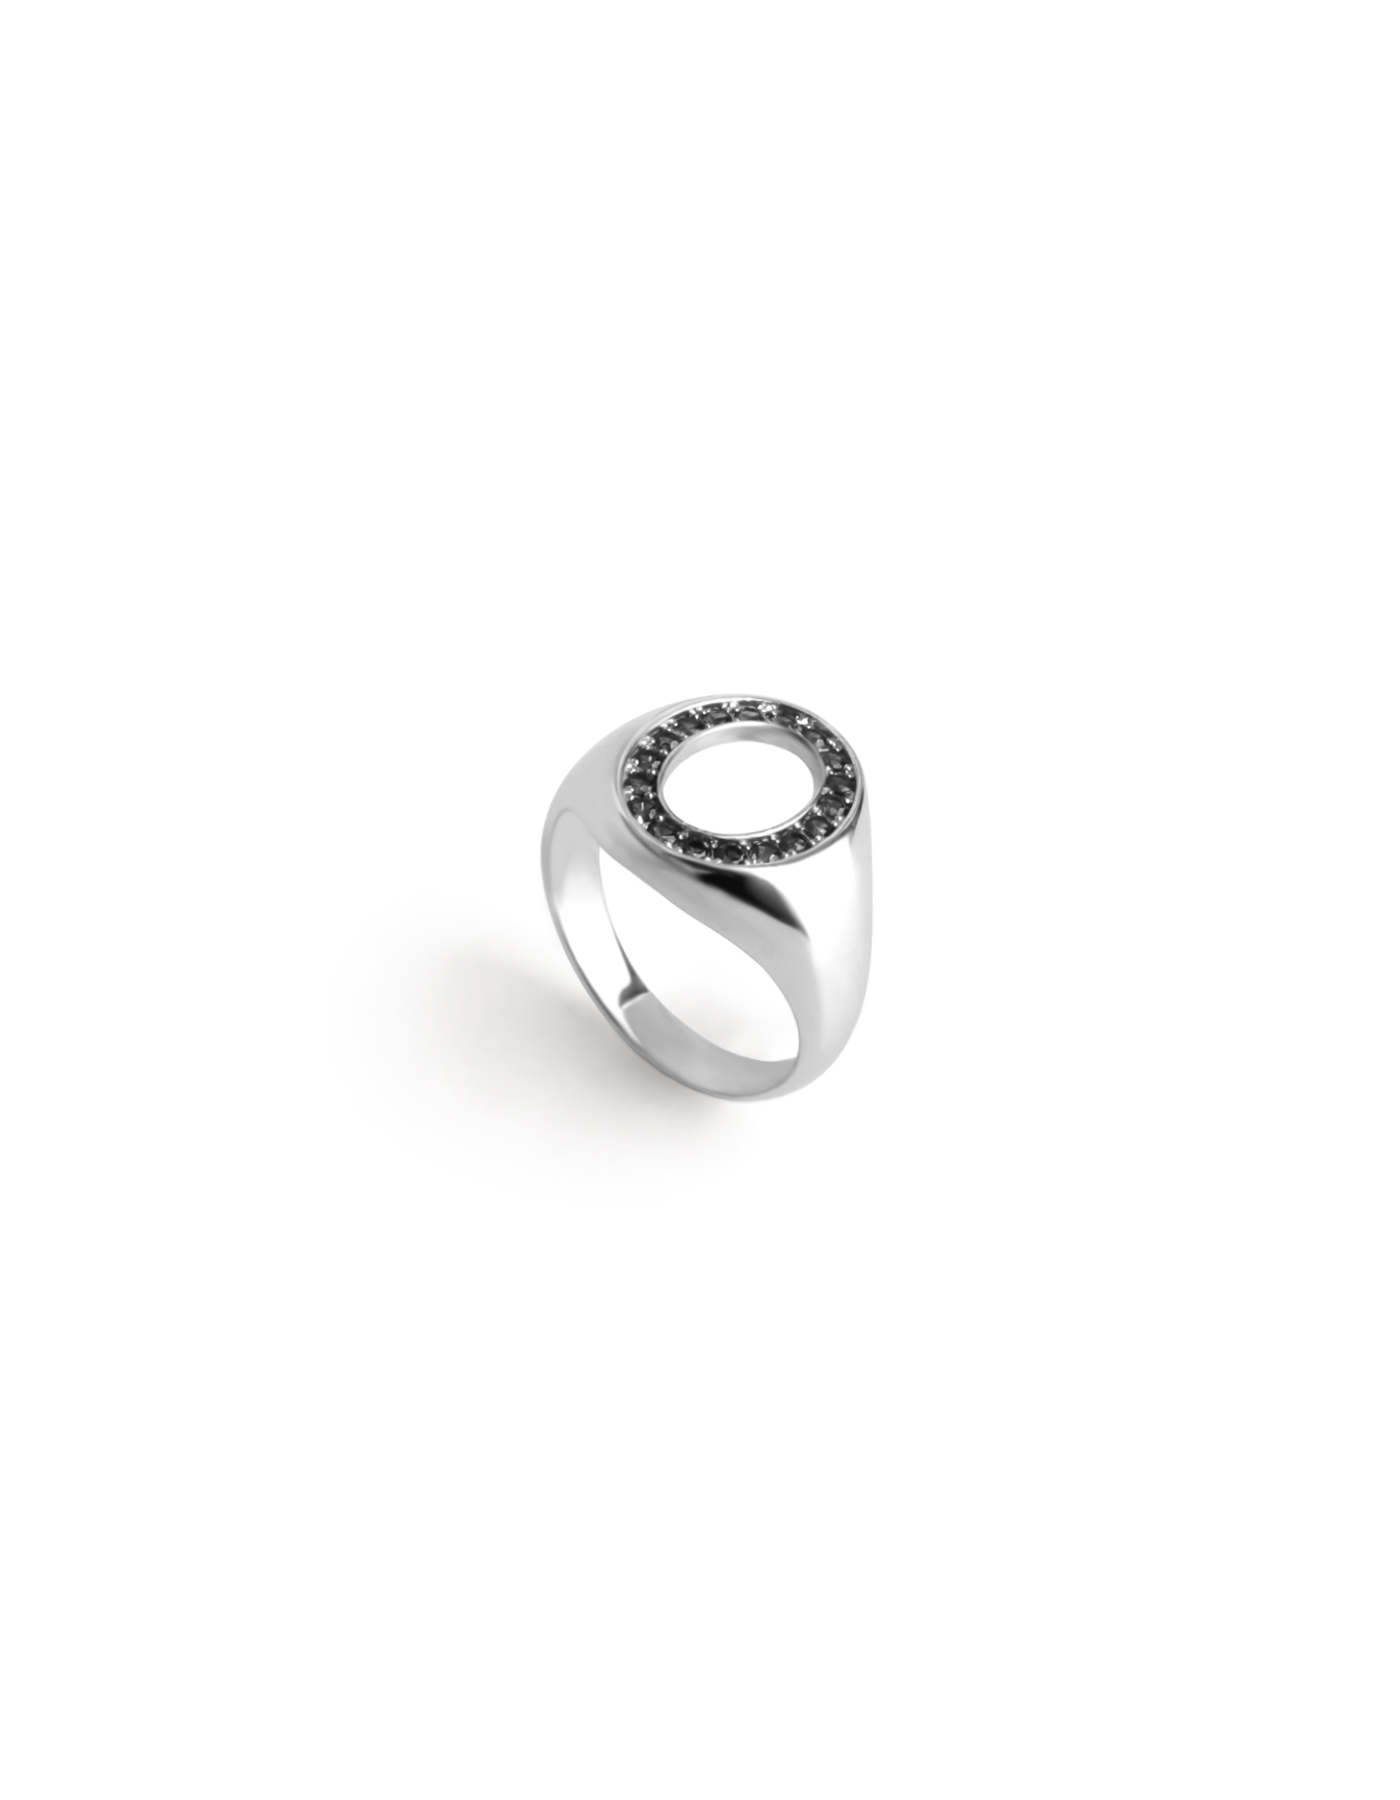 LY Ring (Black)